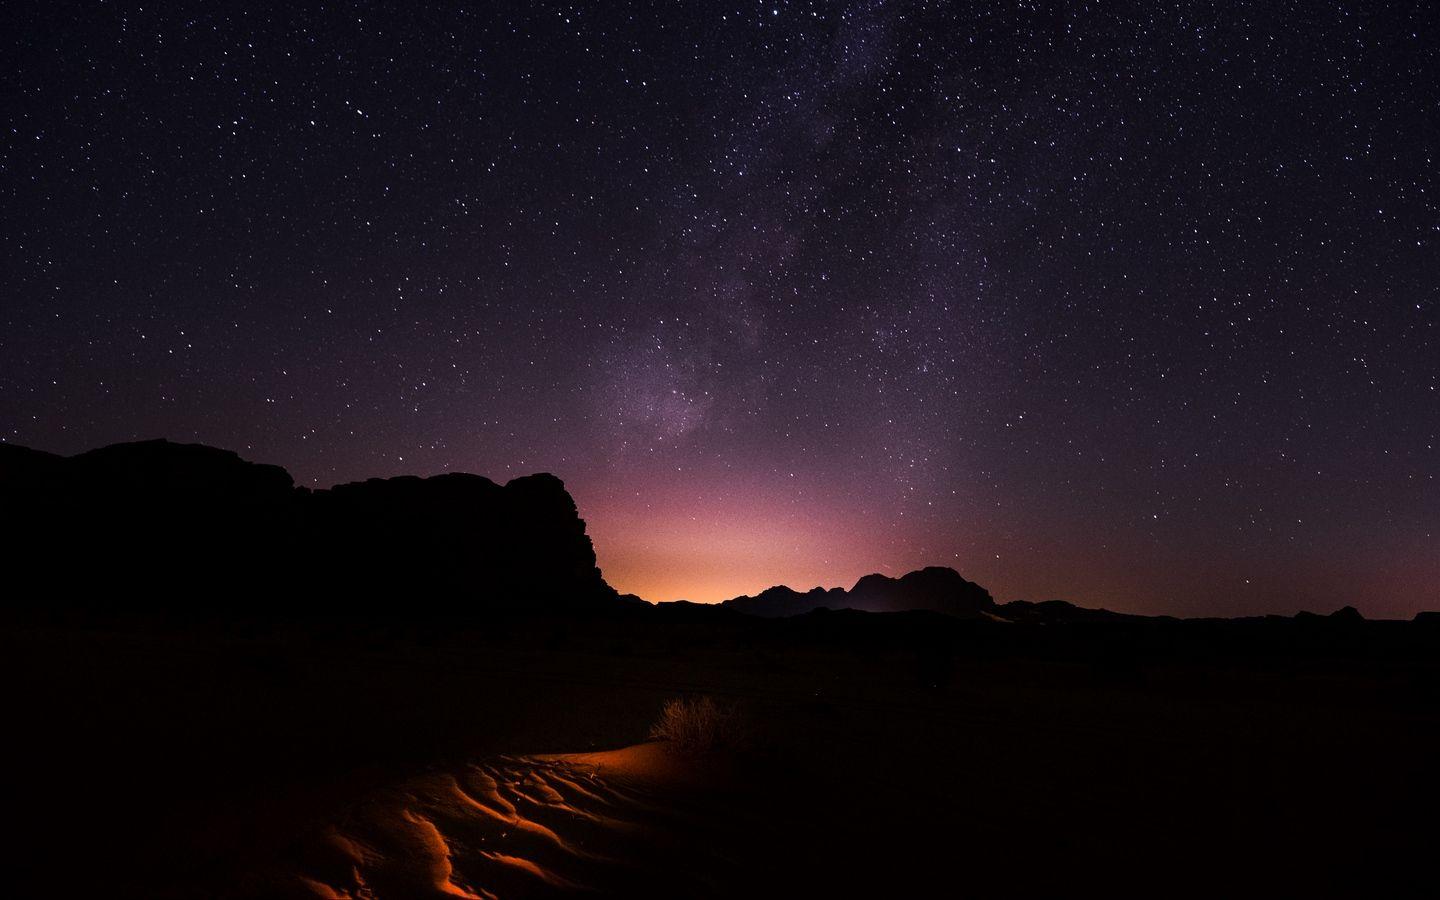 Desert Night Sky Wallpapers - Top Free Desert Night Sky Backgrounds